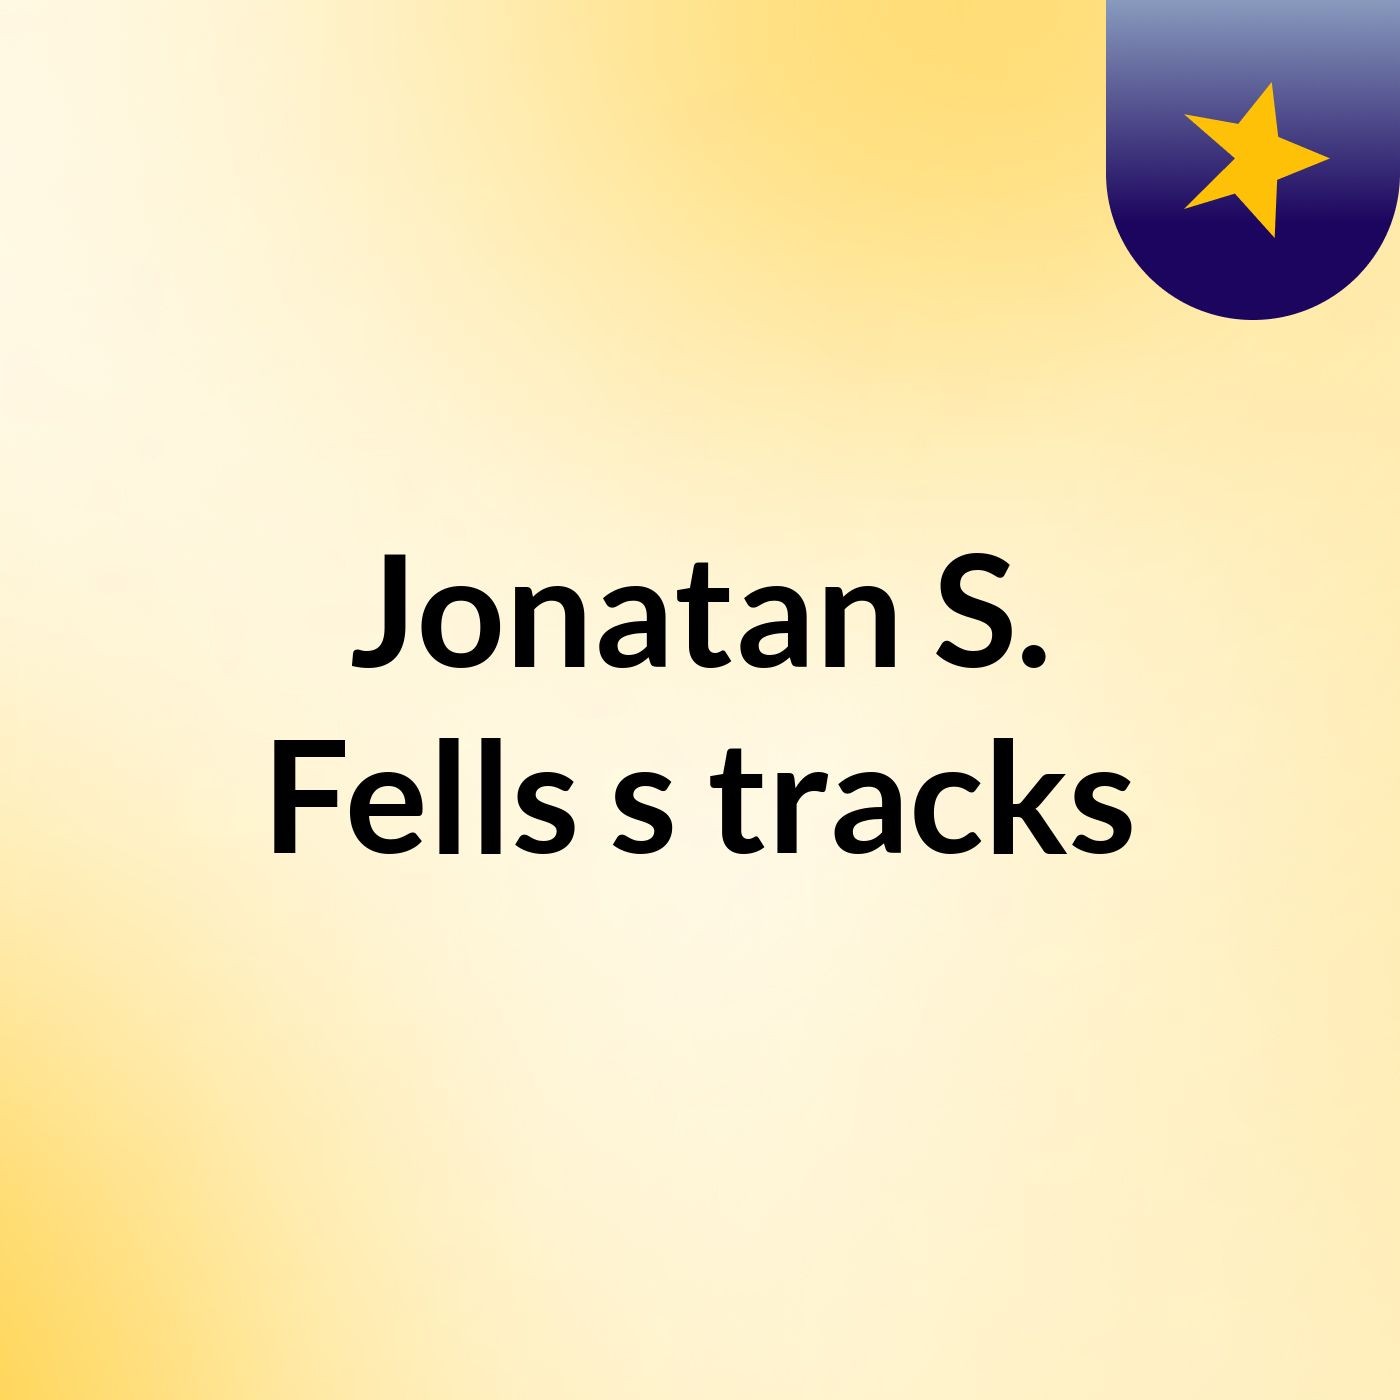 Jonatan S. Fells's tracks